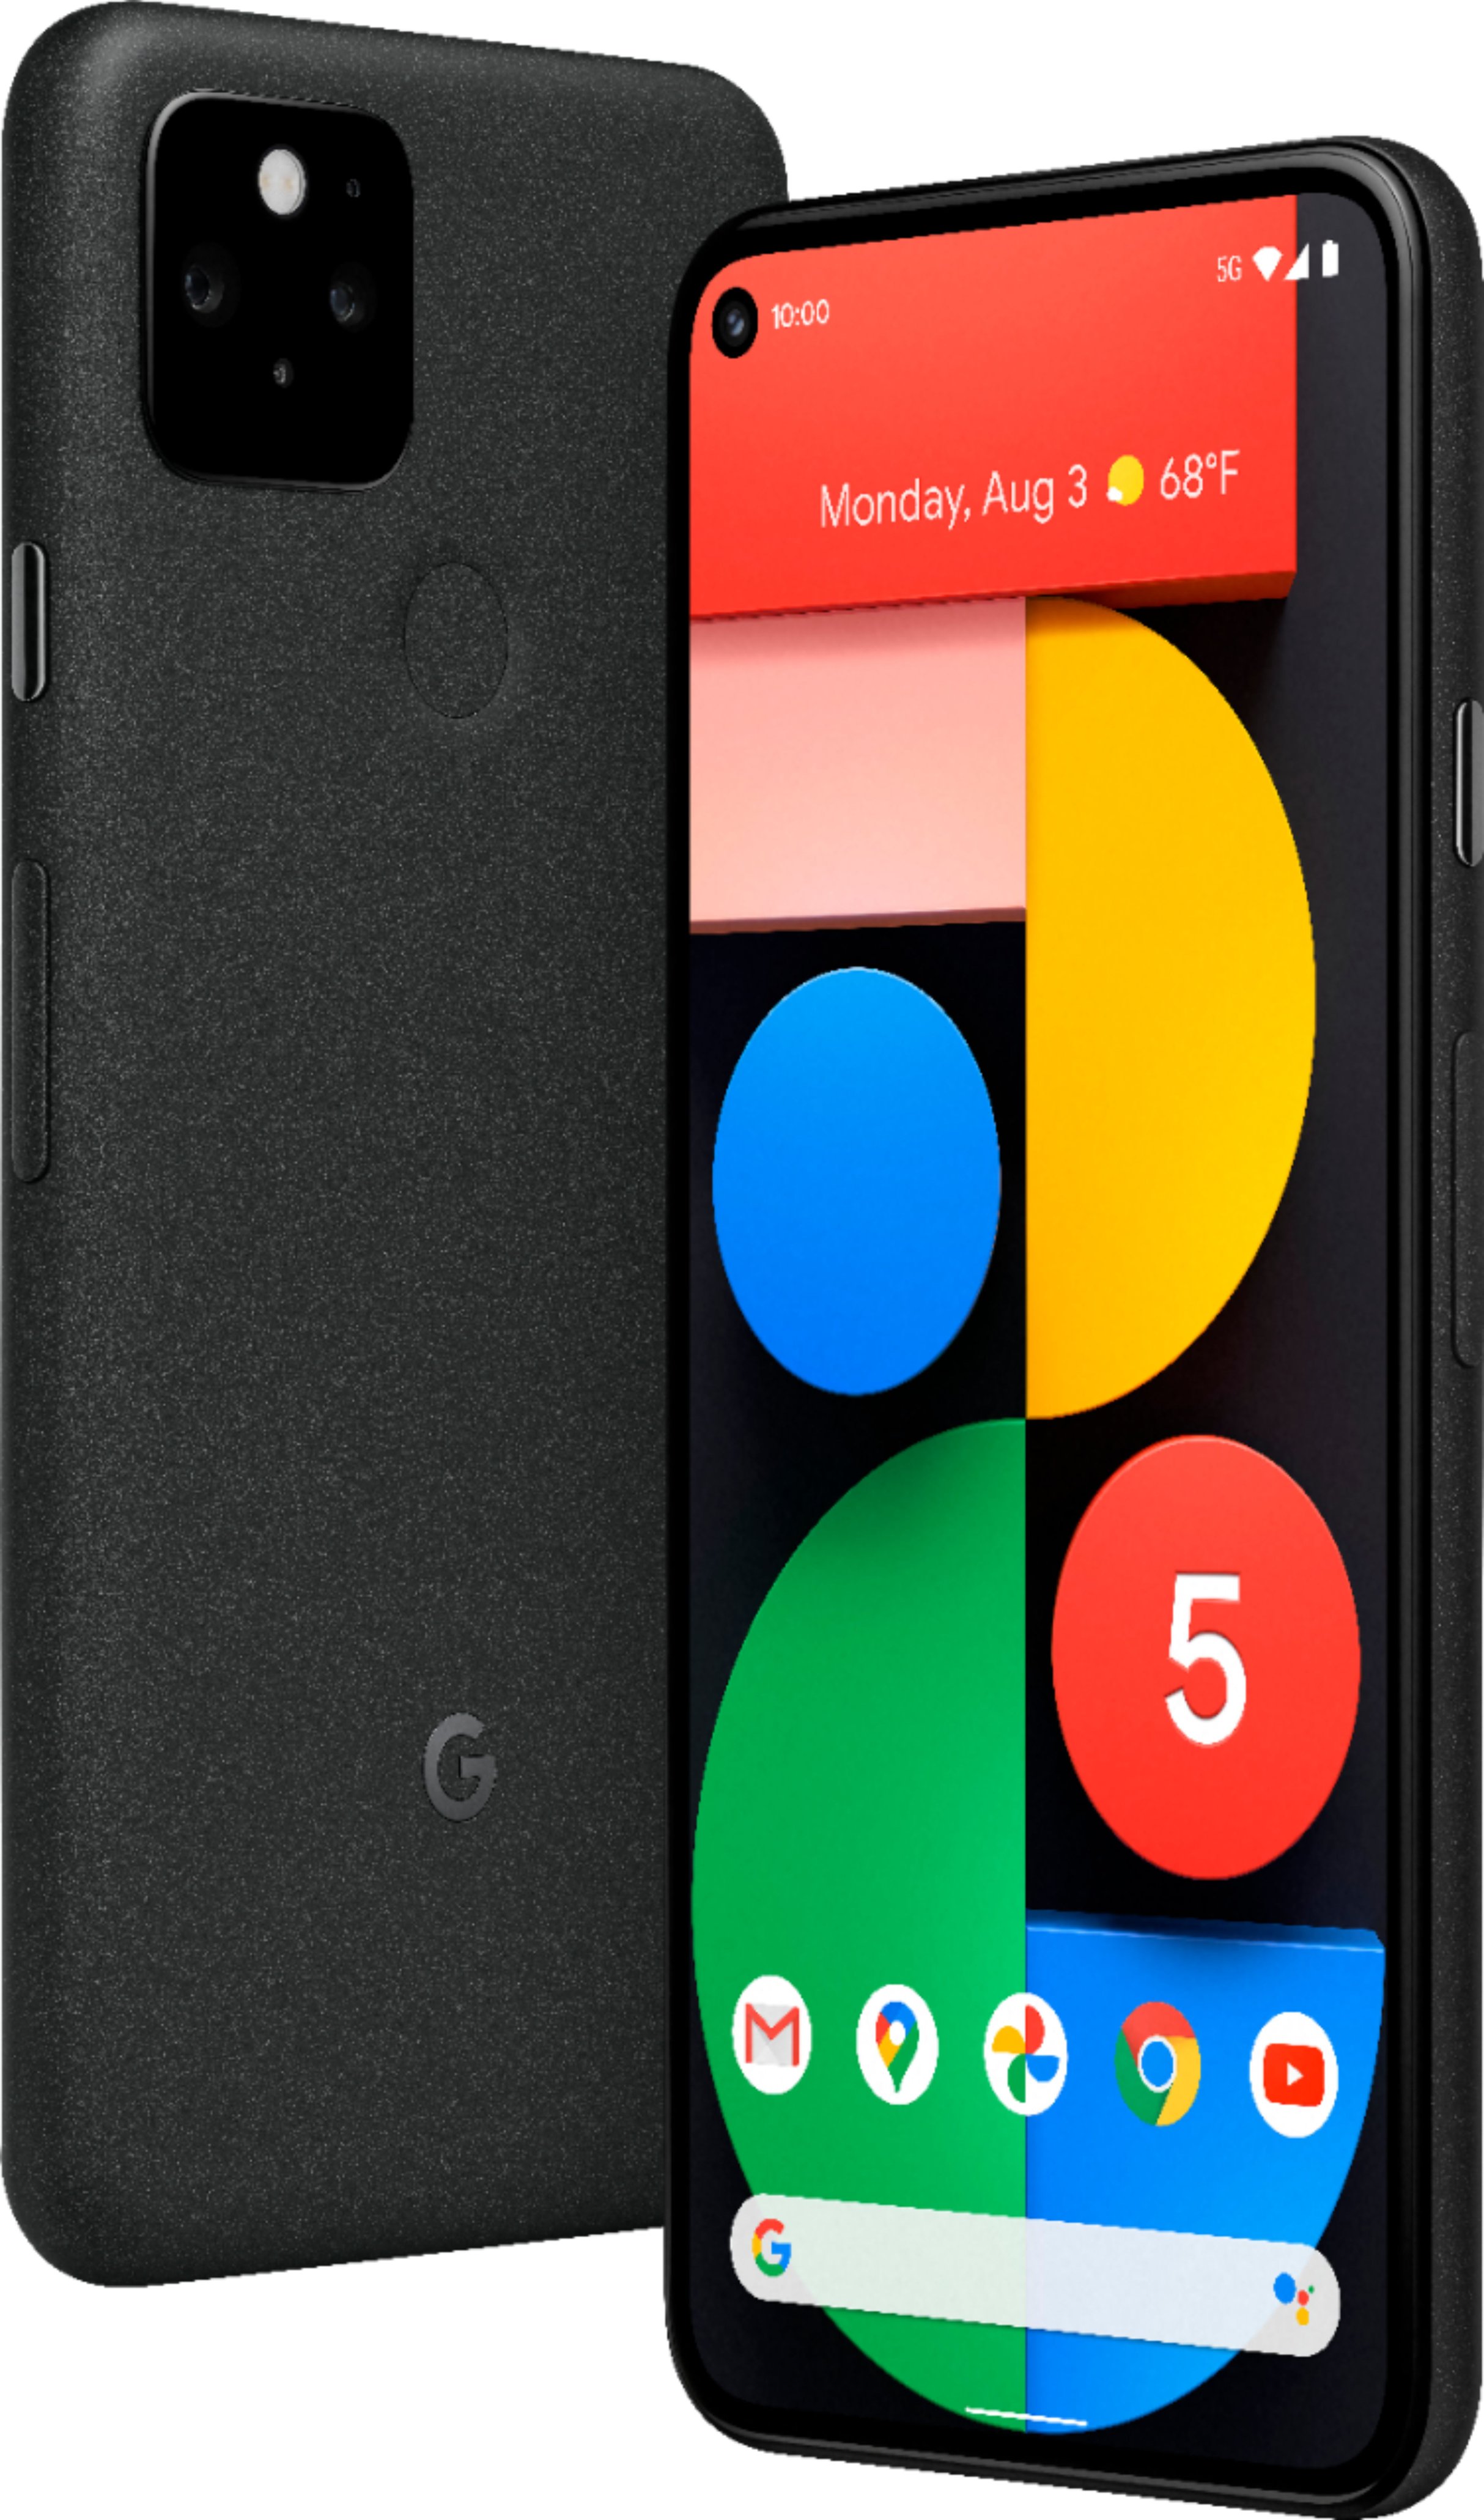 Google Pixel 5a 5g MostlyBlack 128 GB - educationessentials.uwe.ac.uk